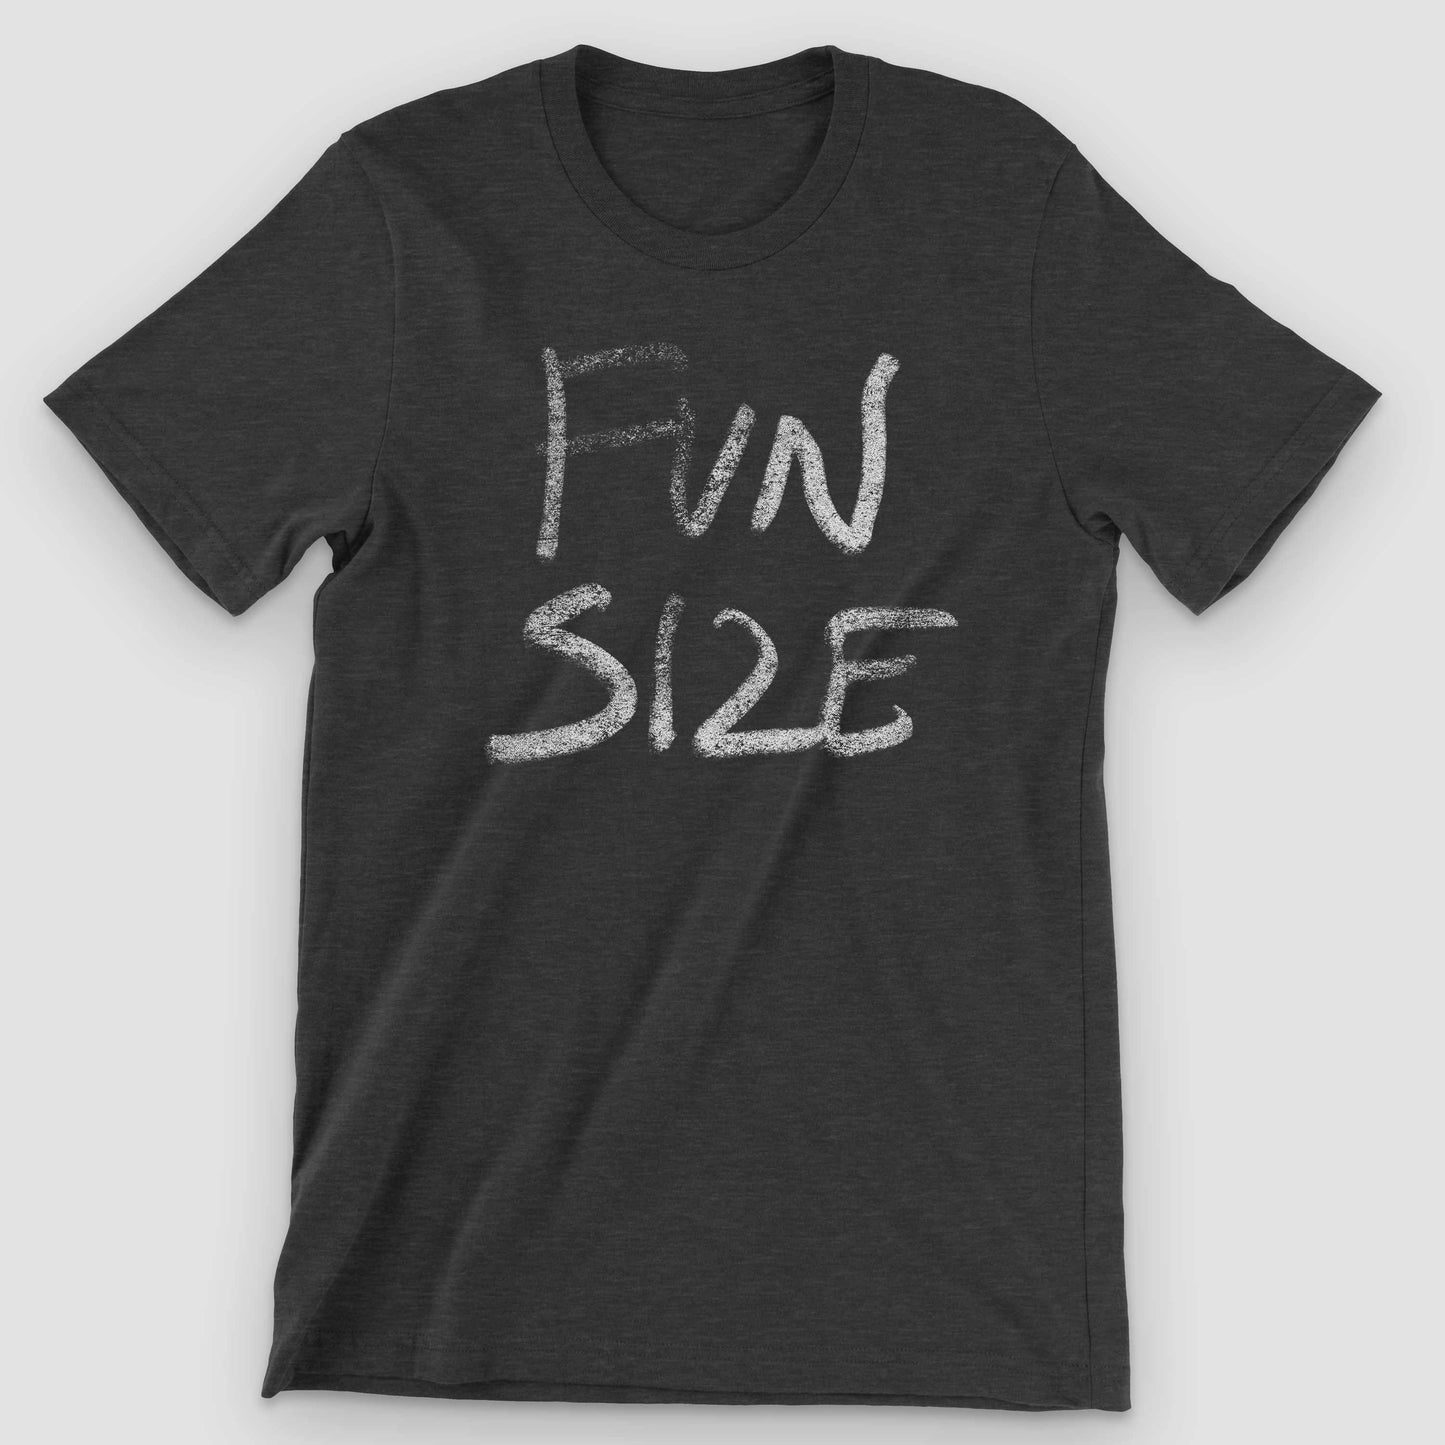  Fun Size Premium T-Shirt by Snaxtime